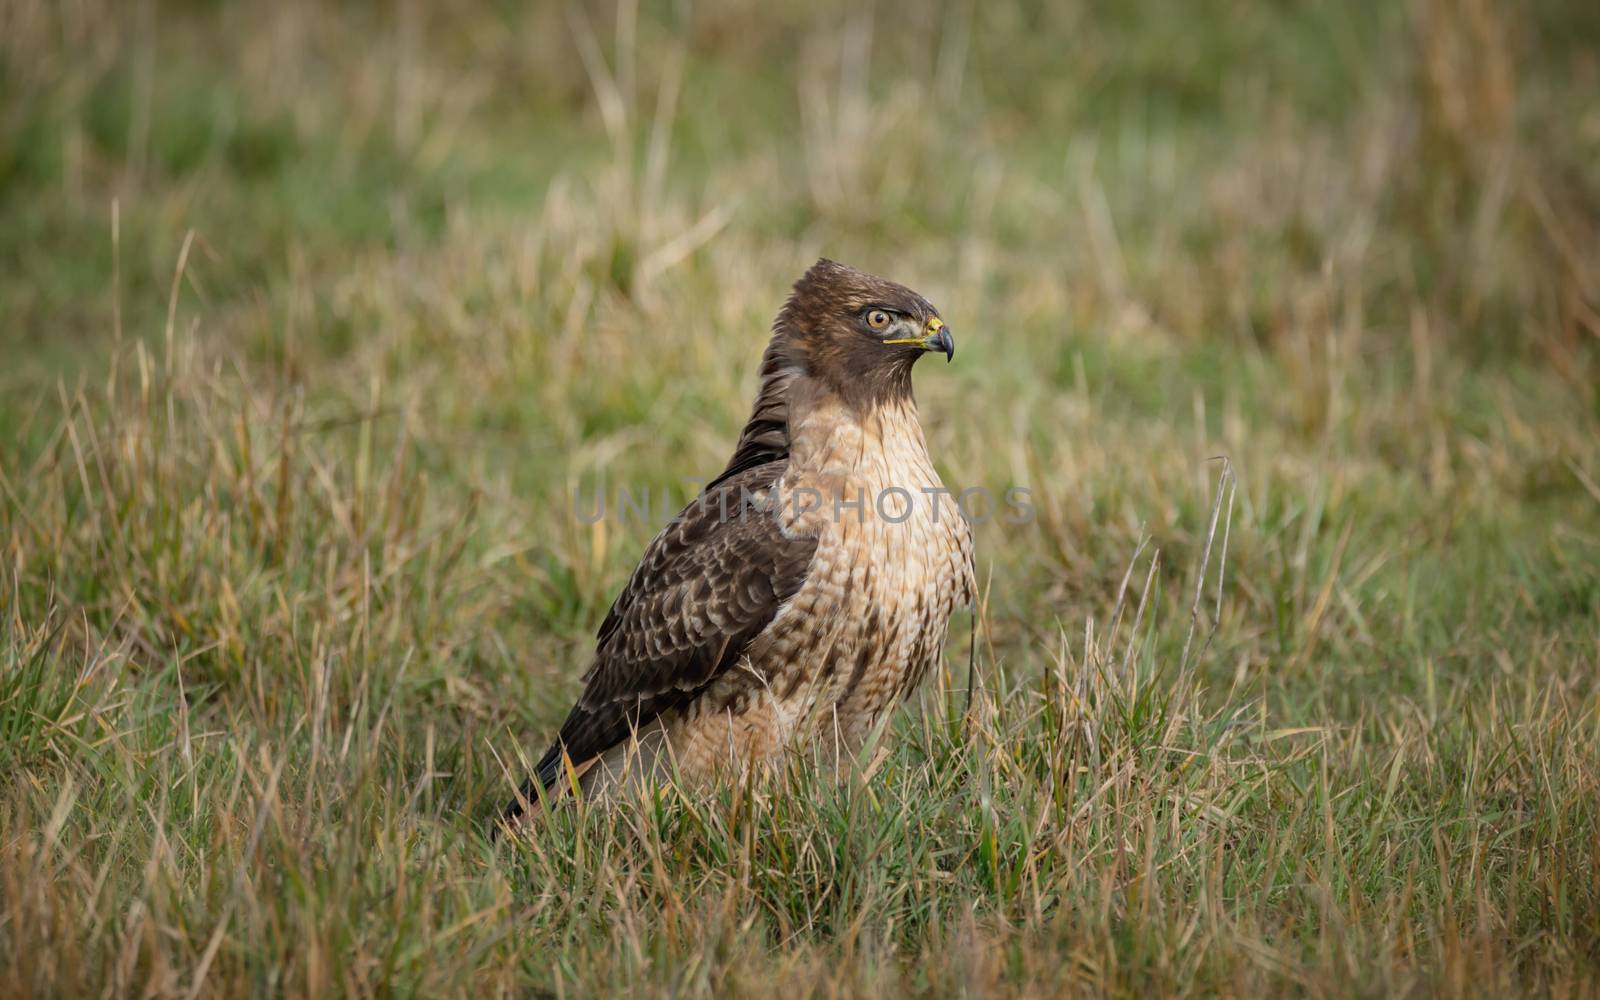 A wild hawk in nature sitting on grass.